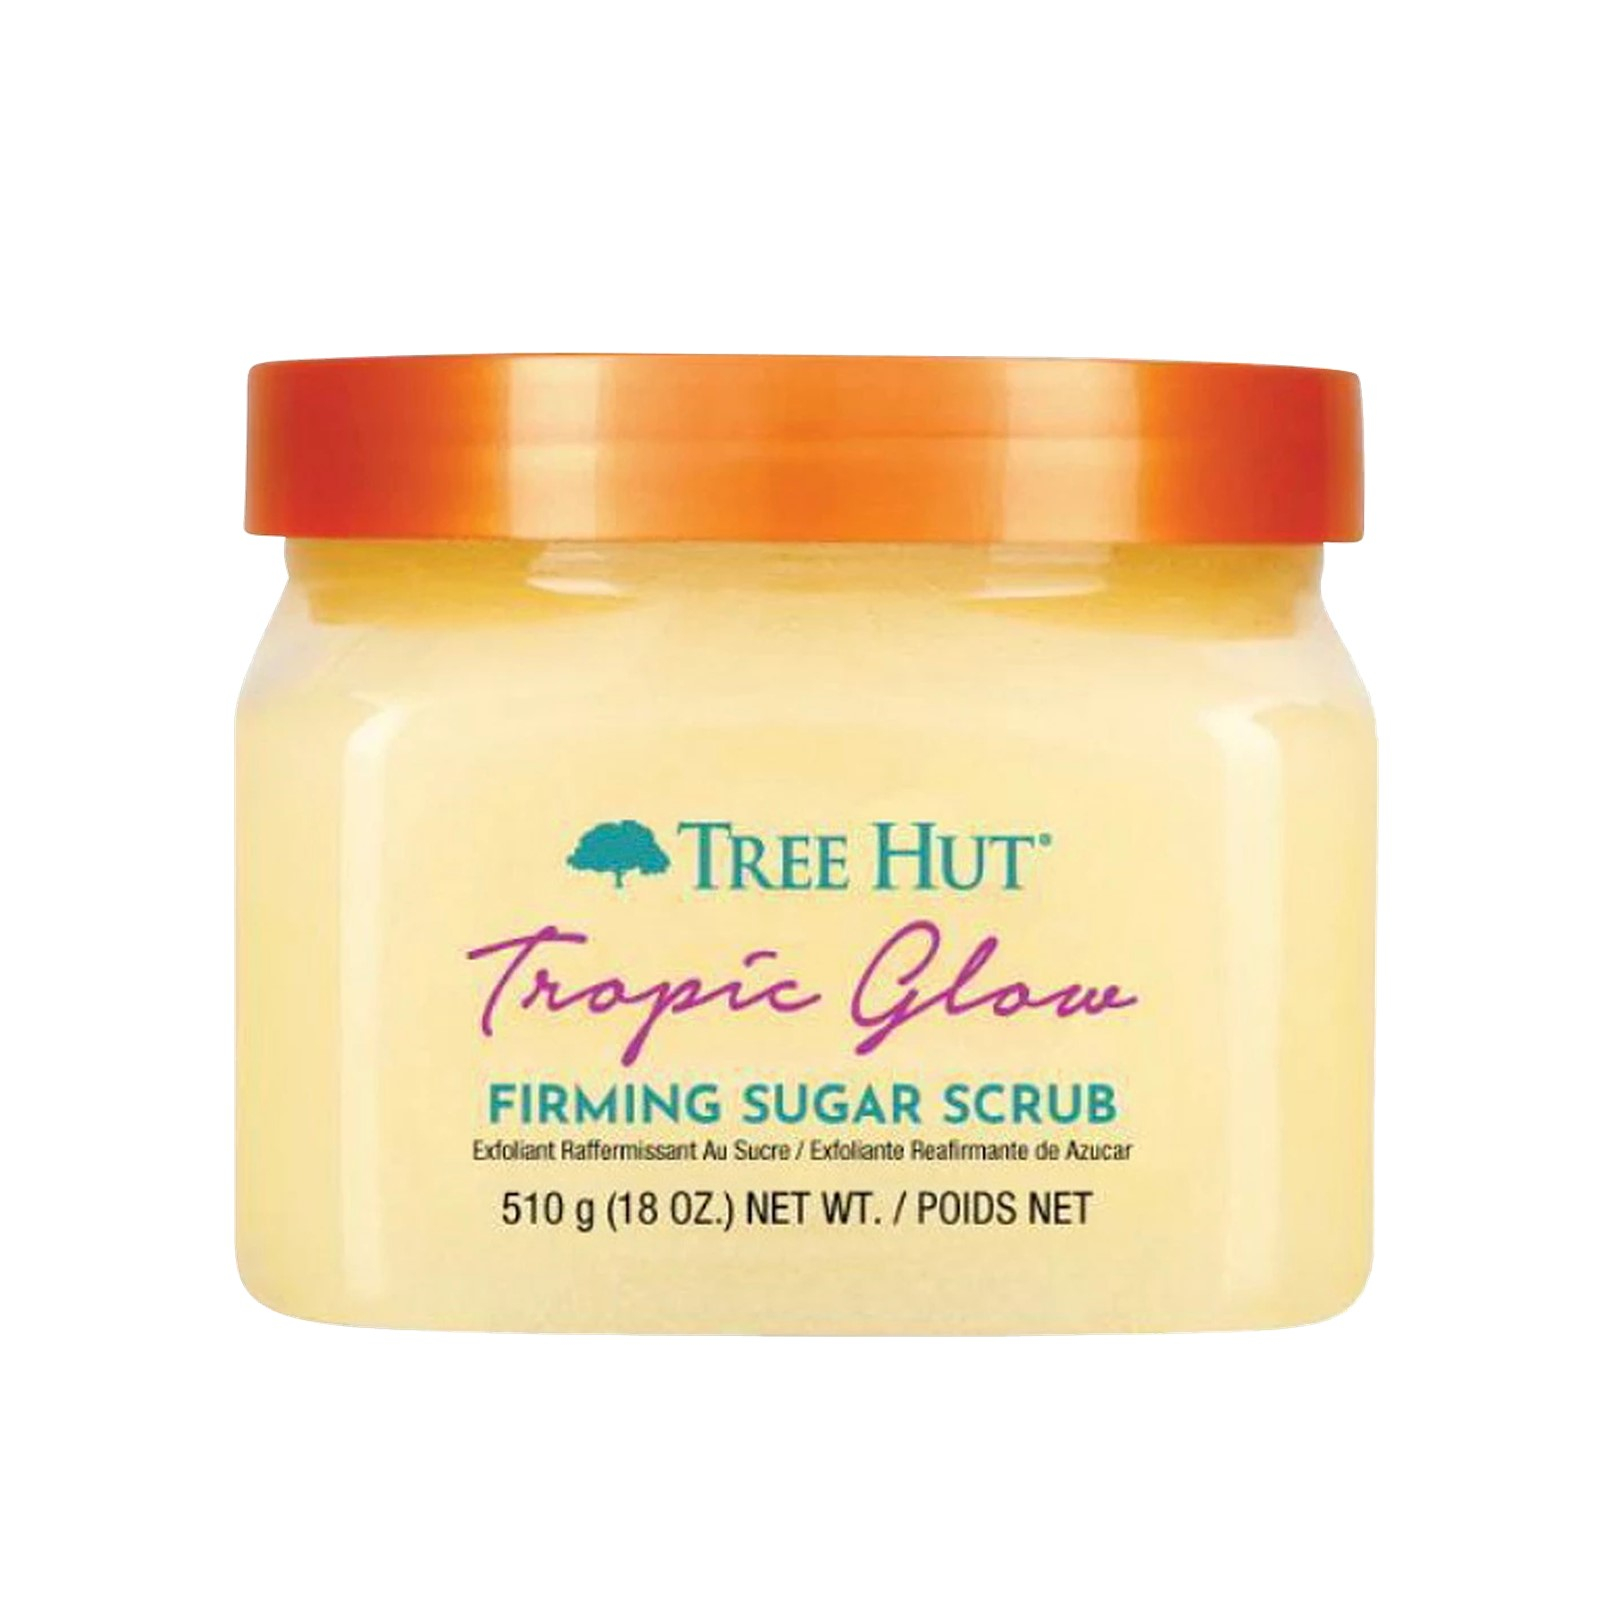 https://static.beautytocare.com/media/catalog/product/t/r/tree-hut-tropic-glow-firming-sugar-scrub-510g.jpg